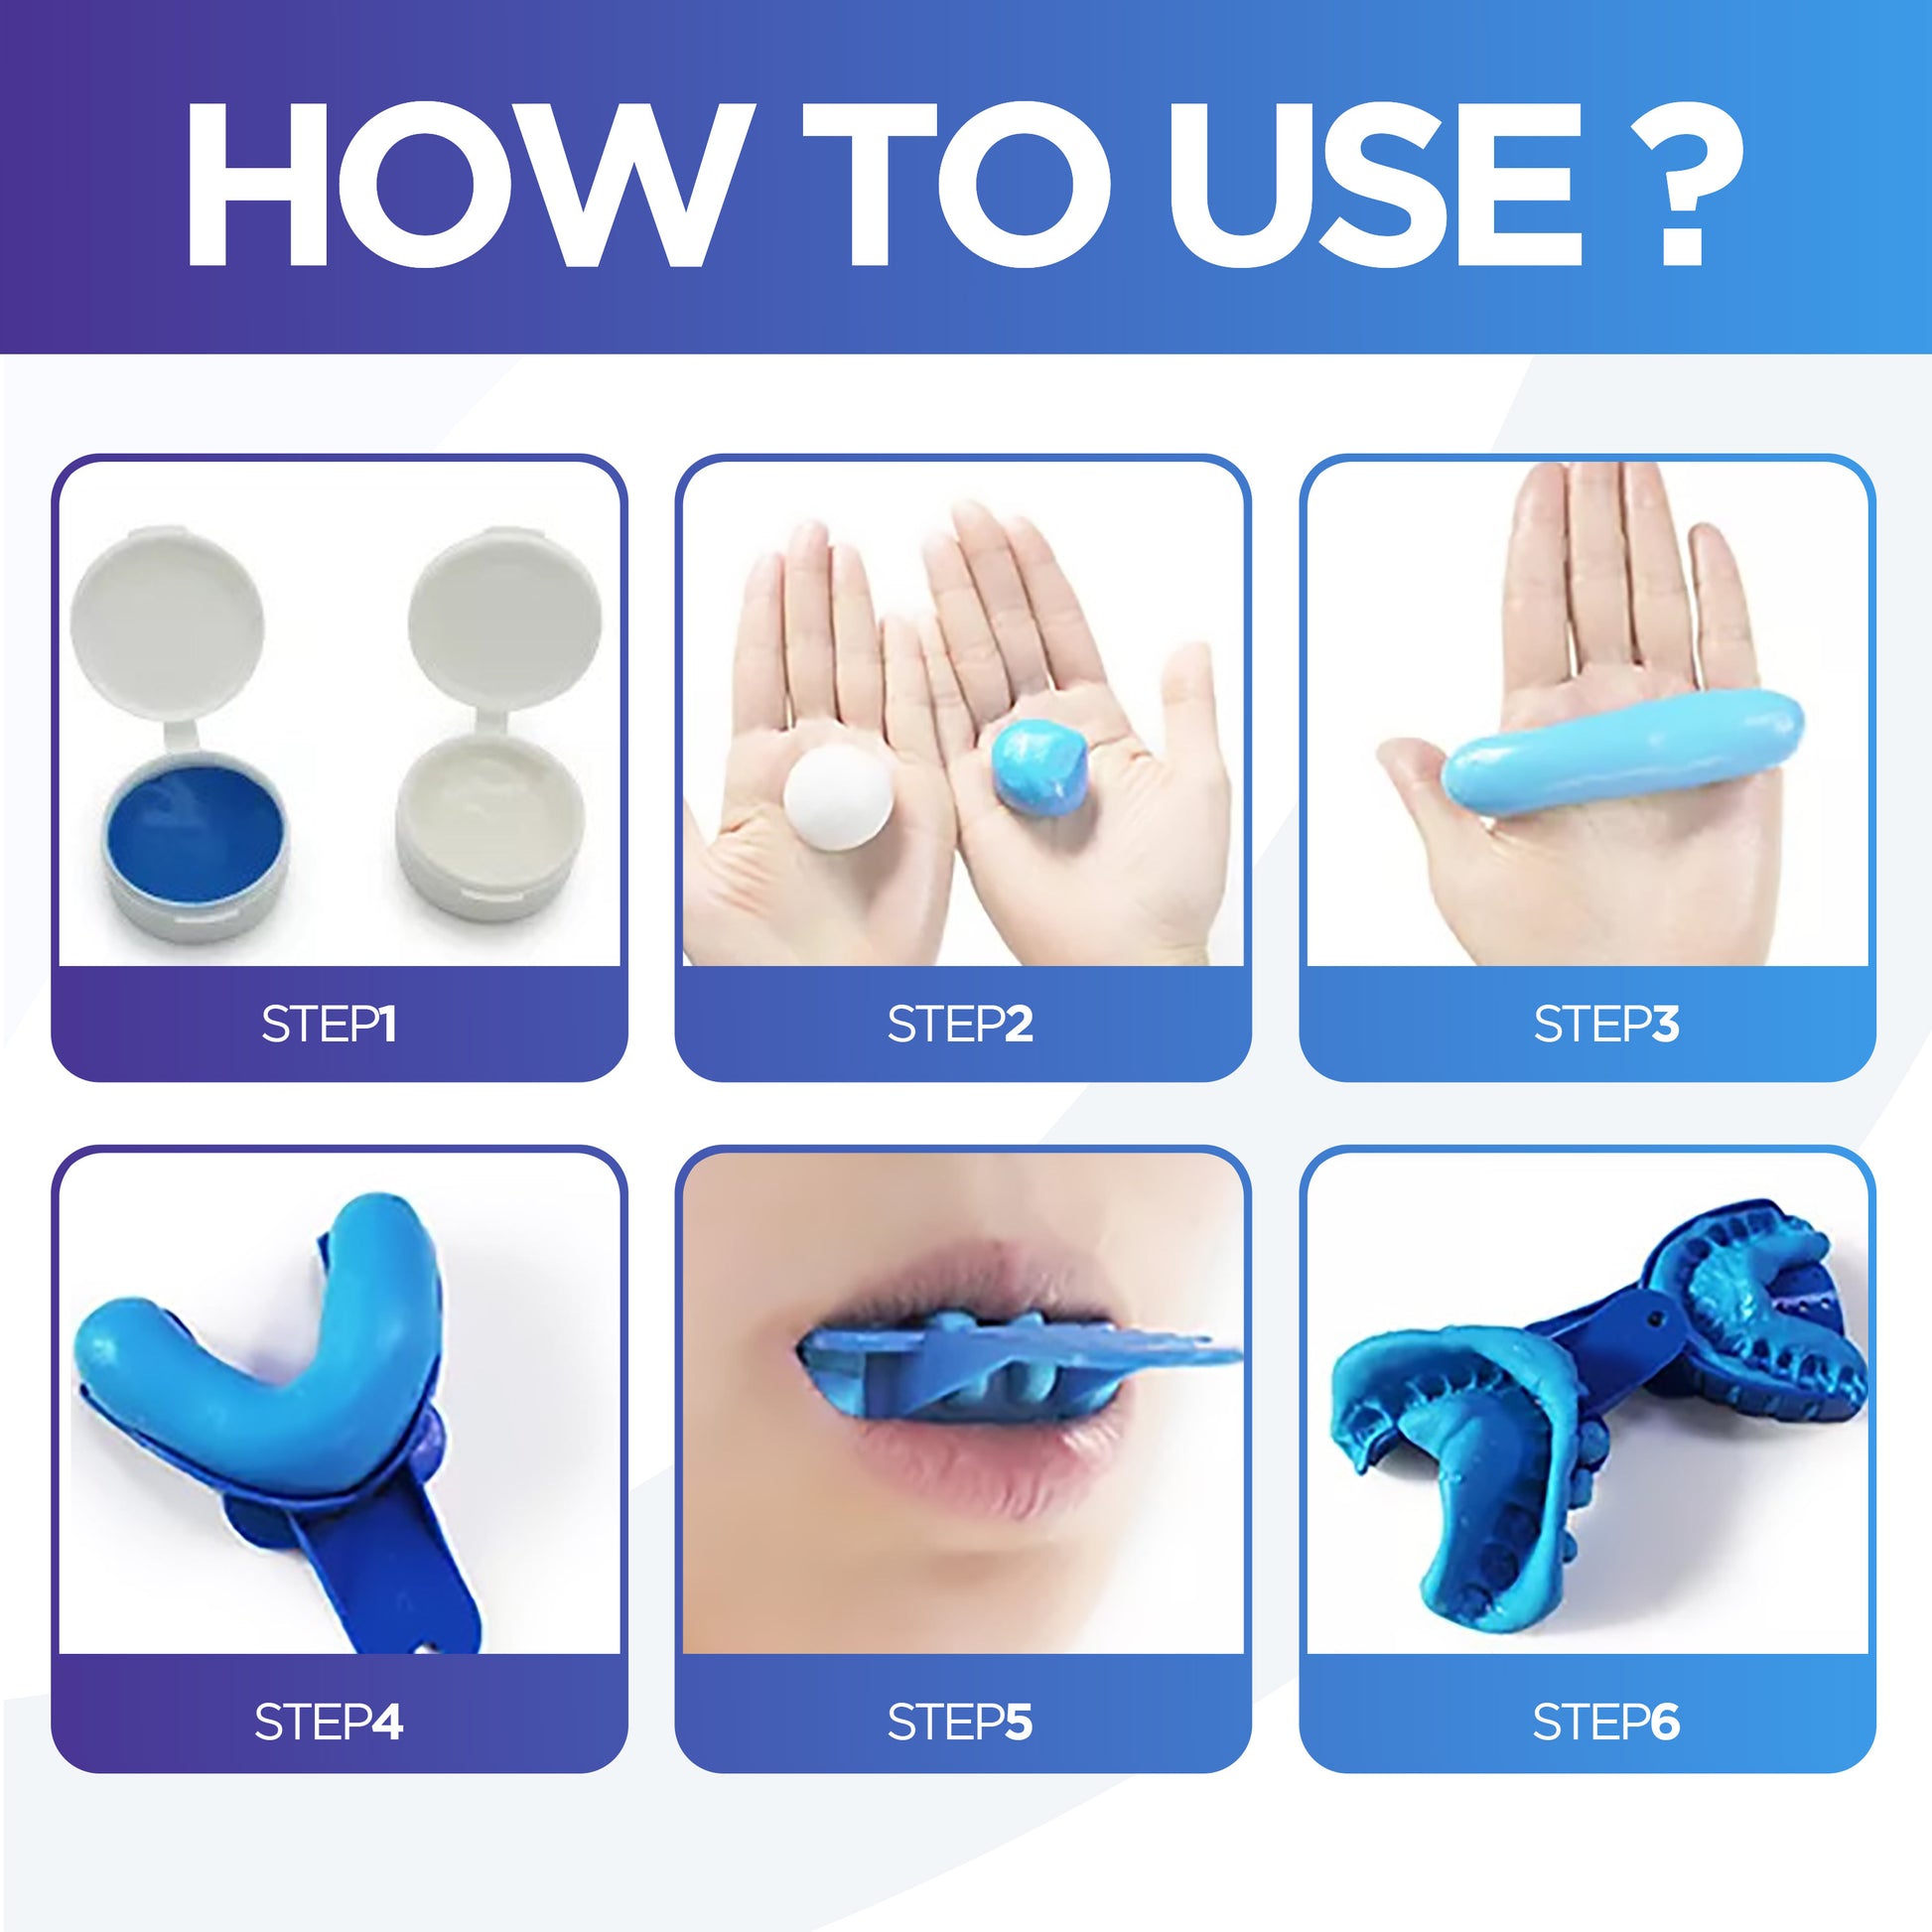 TIK-SI Teeth Impression Kit Putty Silicone Material Tray Teeth